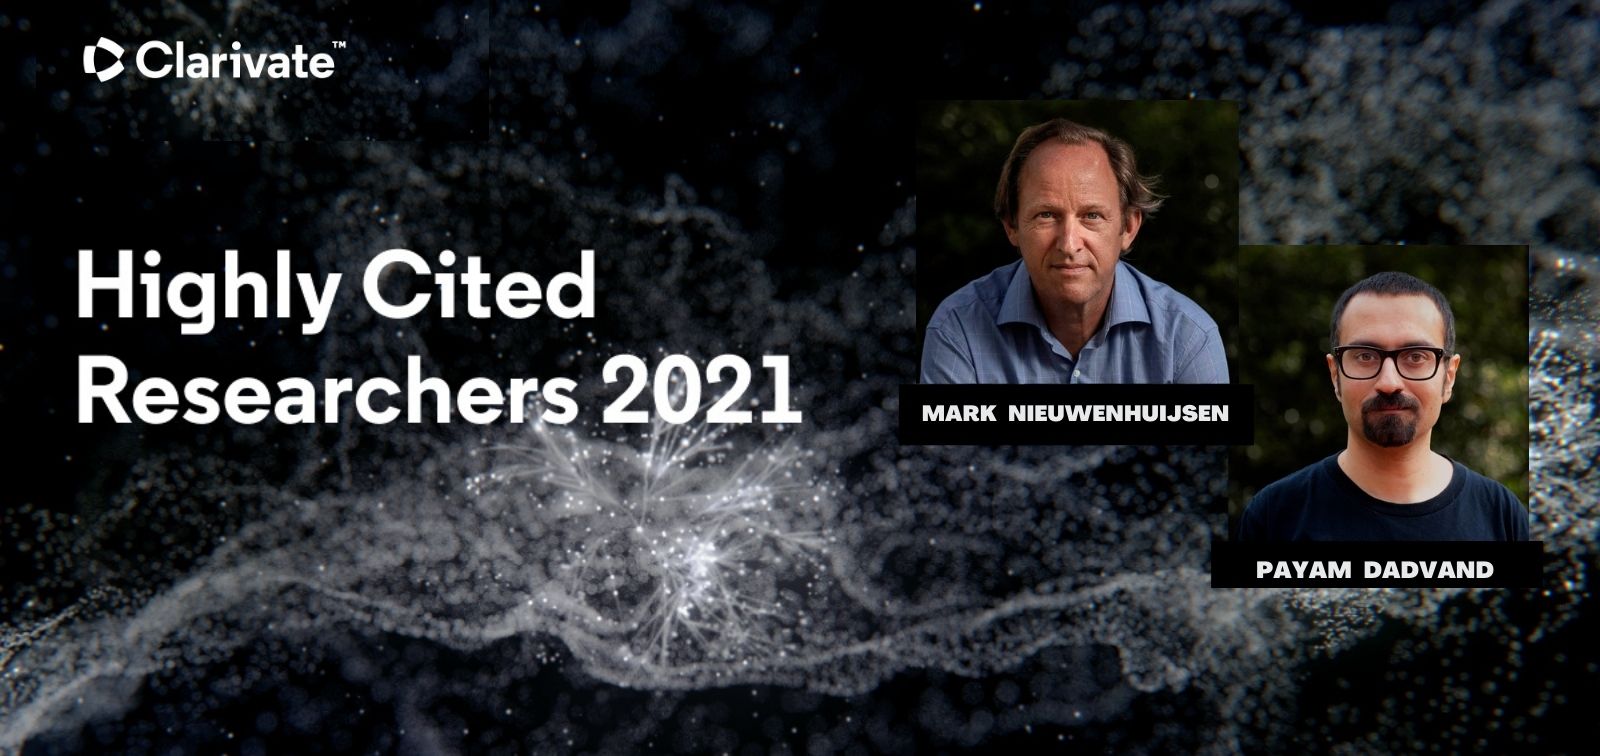 Highly Cited Researchers 2021 Payam Davdand Mark Nieuwenhuijsen